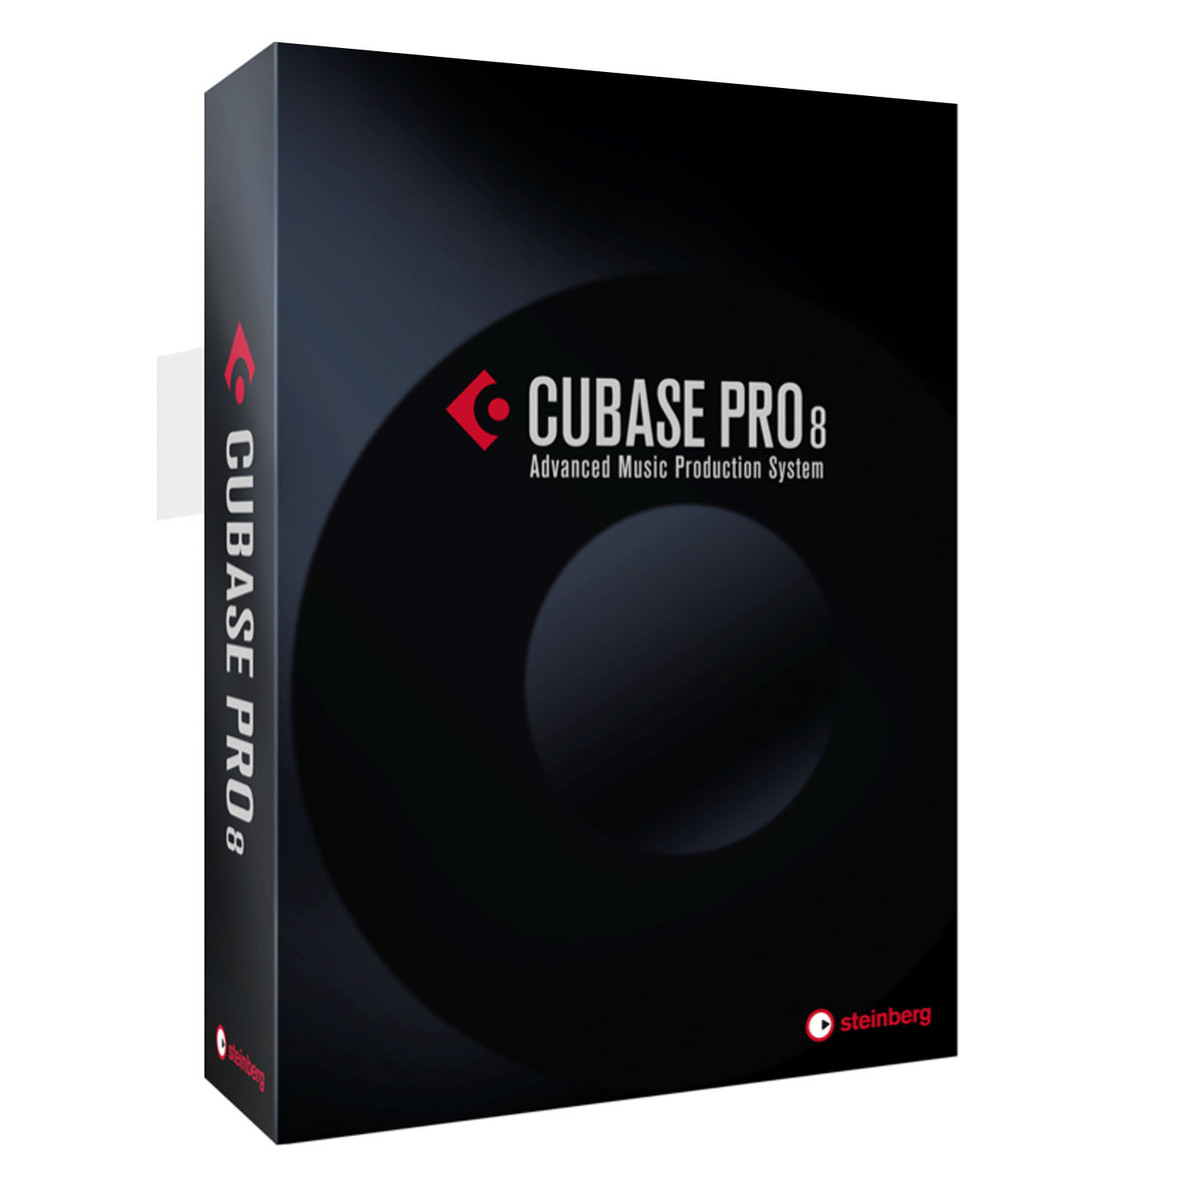 cubase 10 free download full version crack